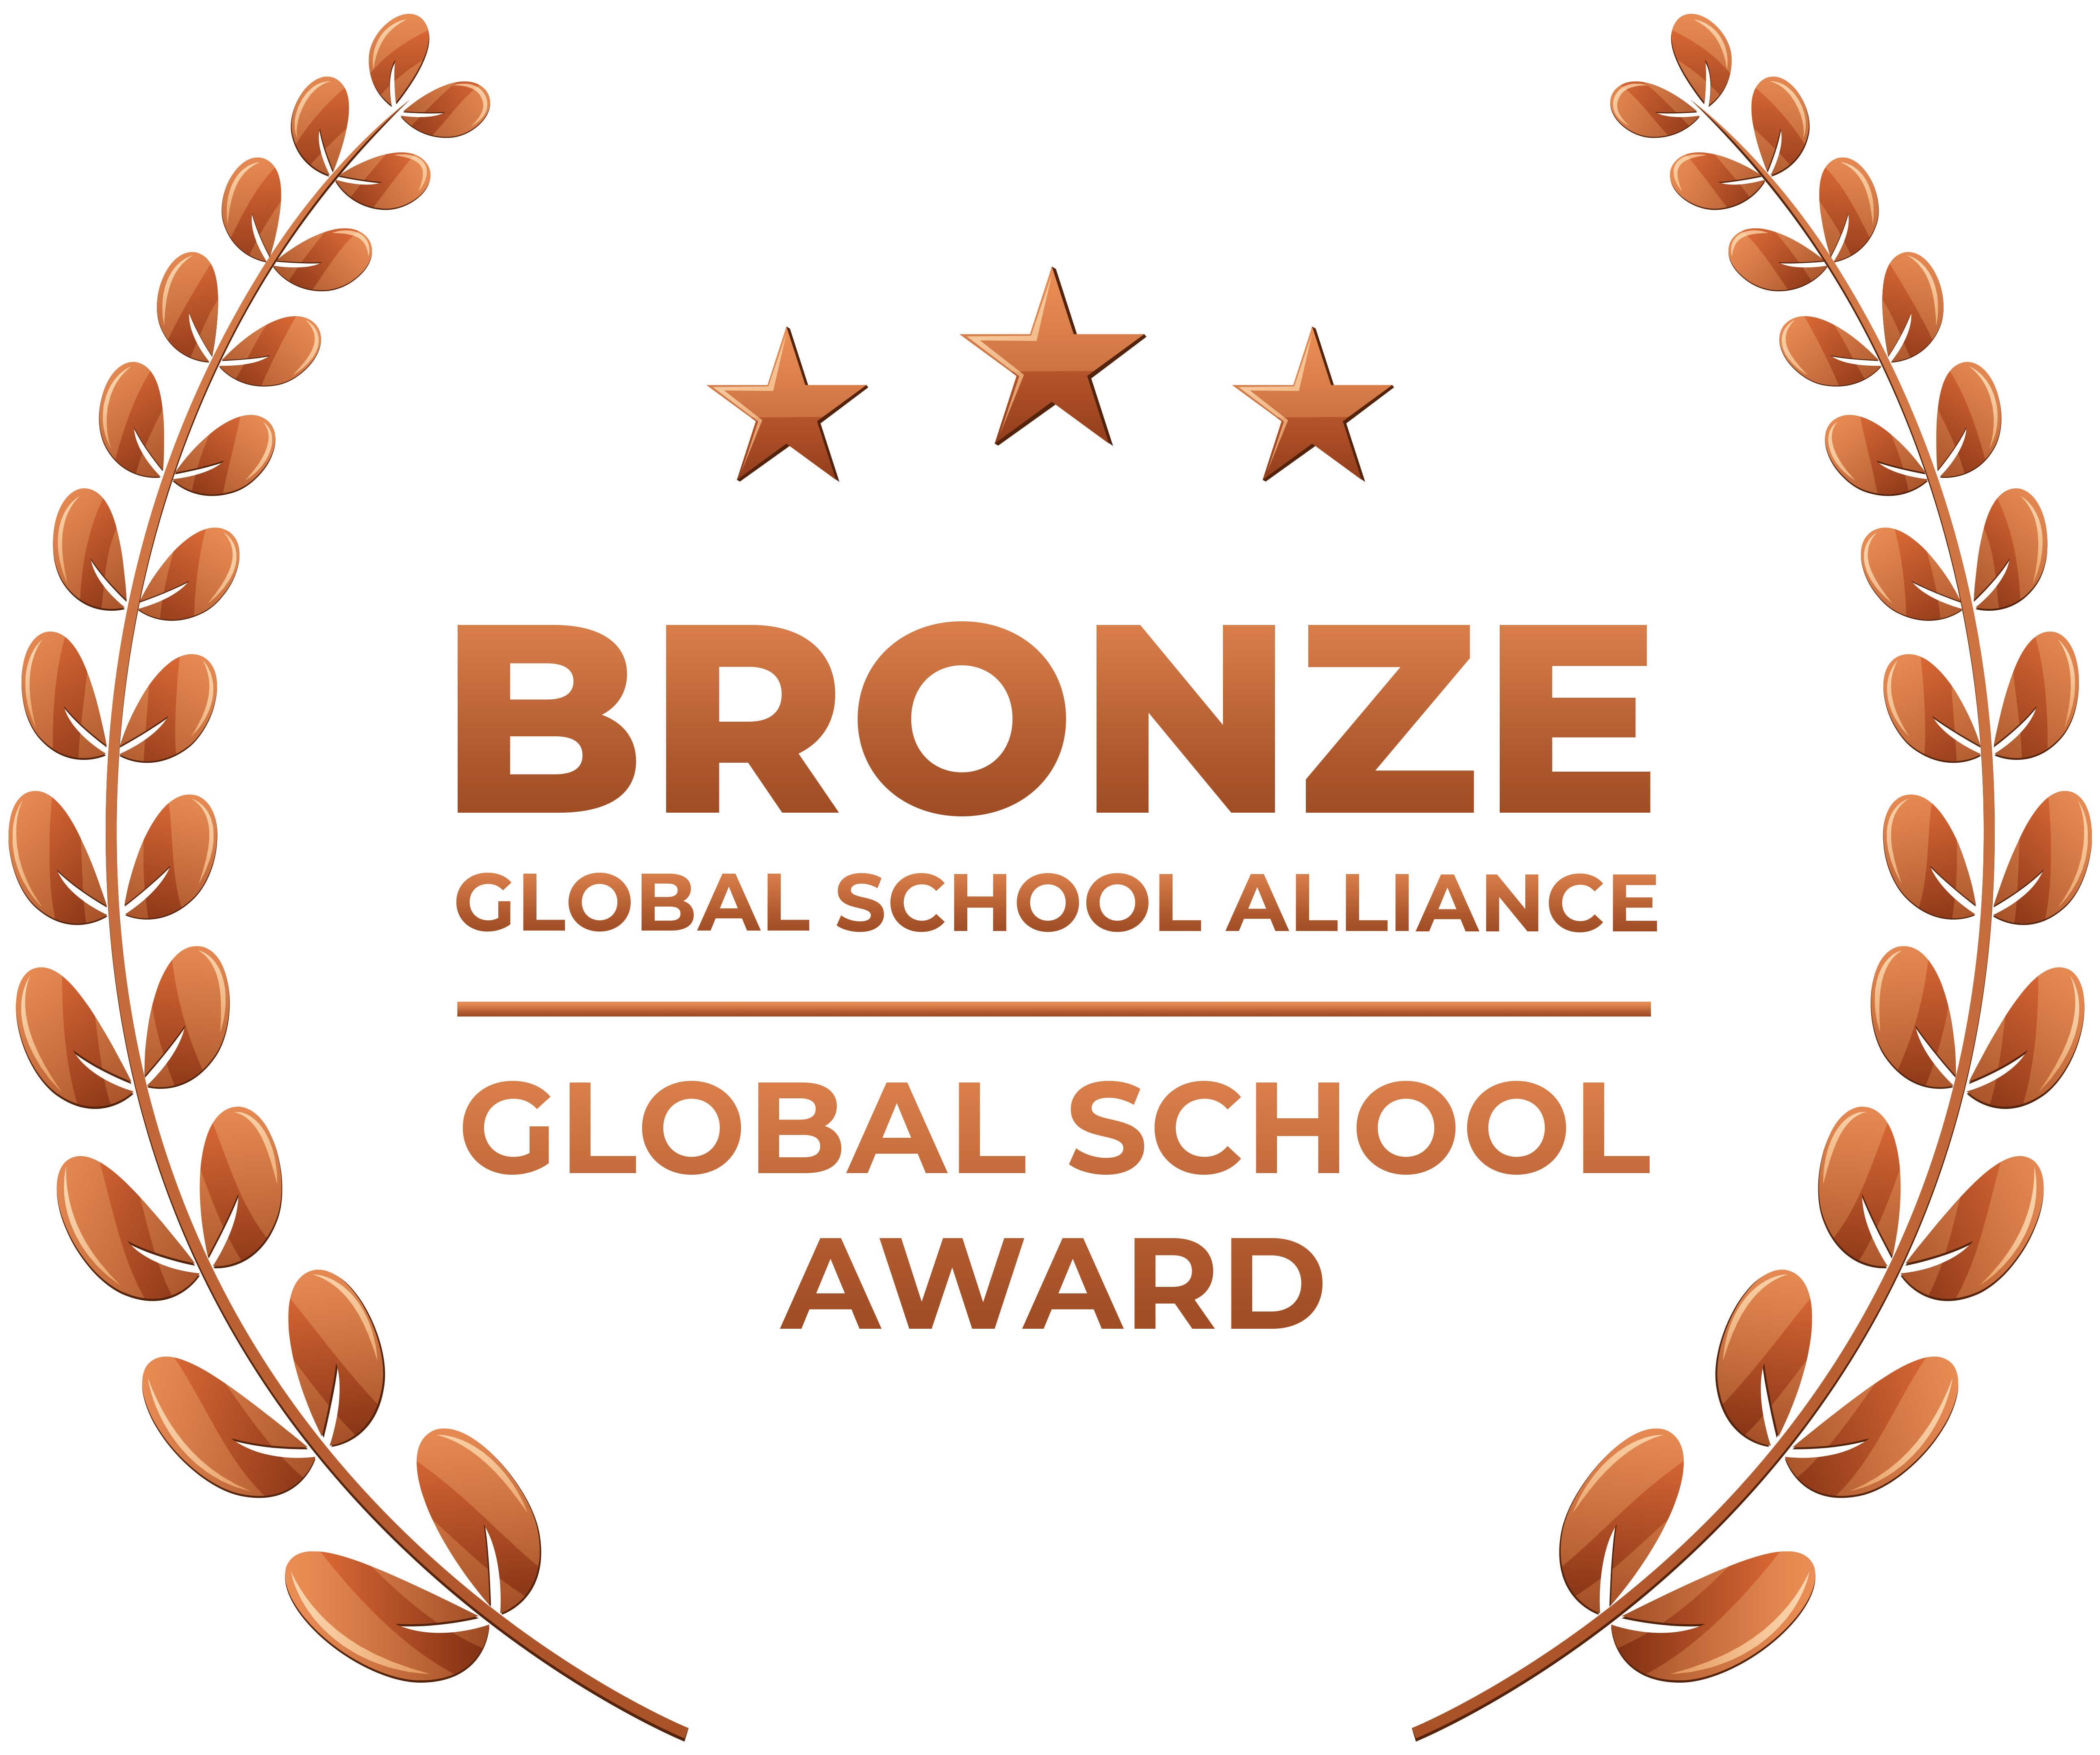 Our Bronze Global School Award